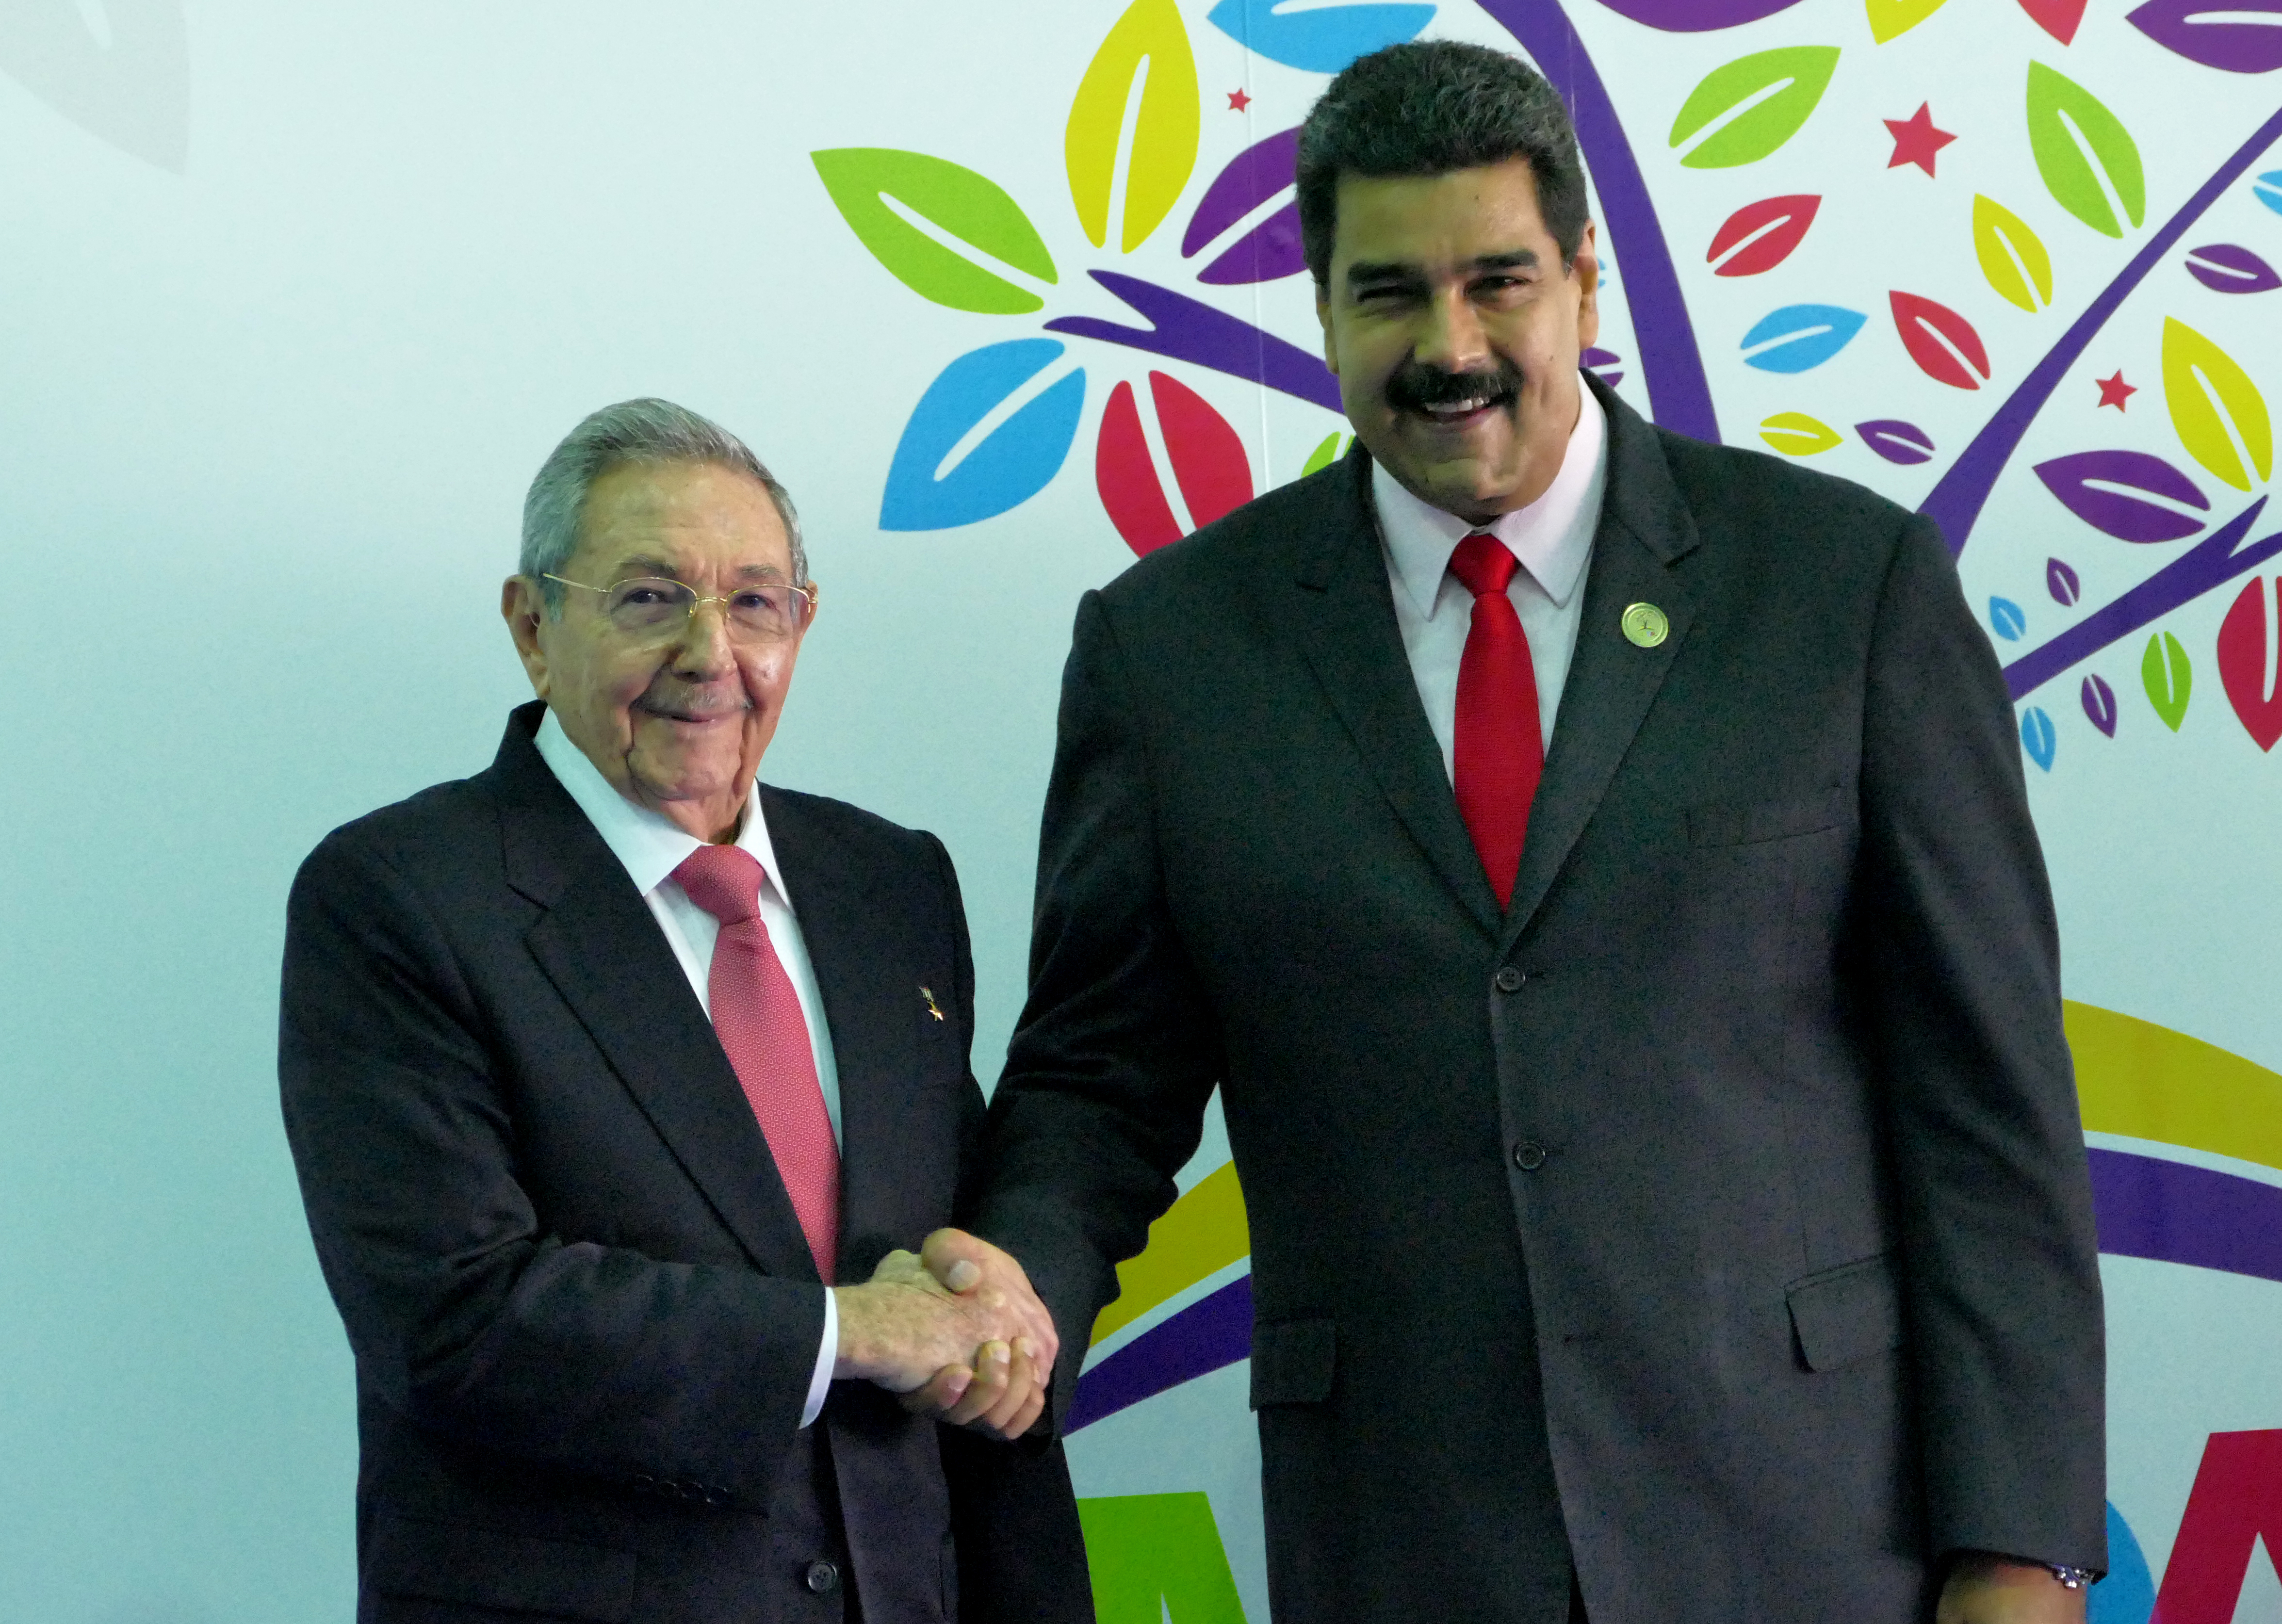 Raul Castro and Nicolás Maduro support Russia